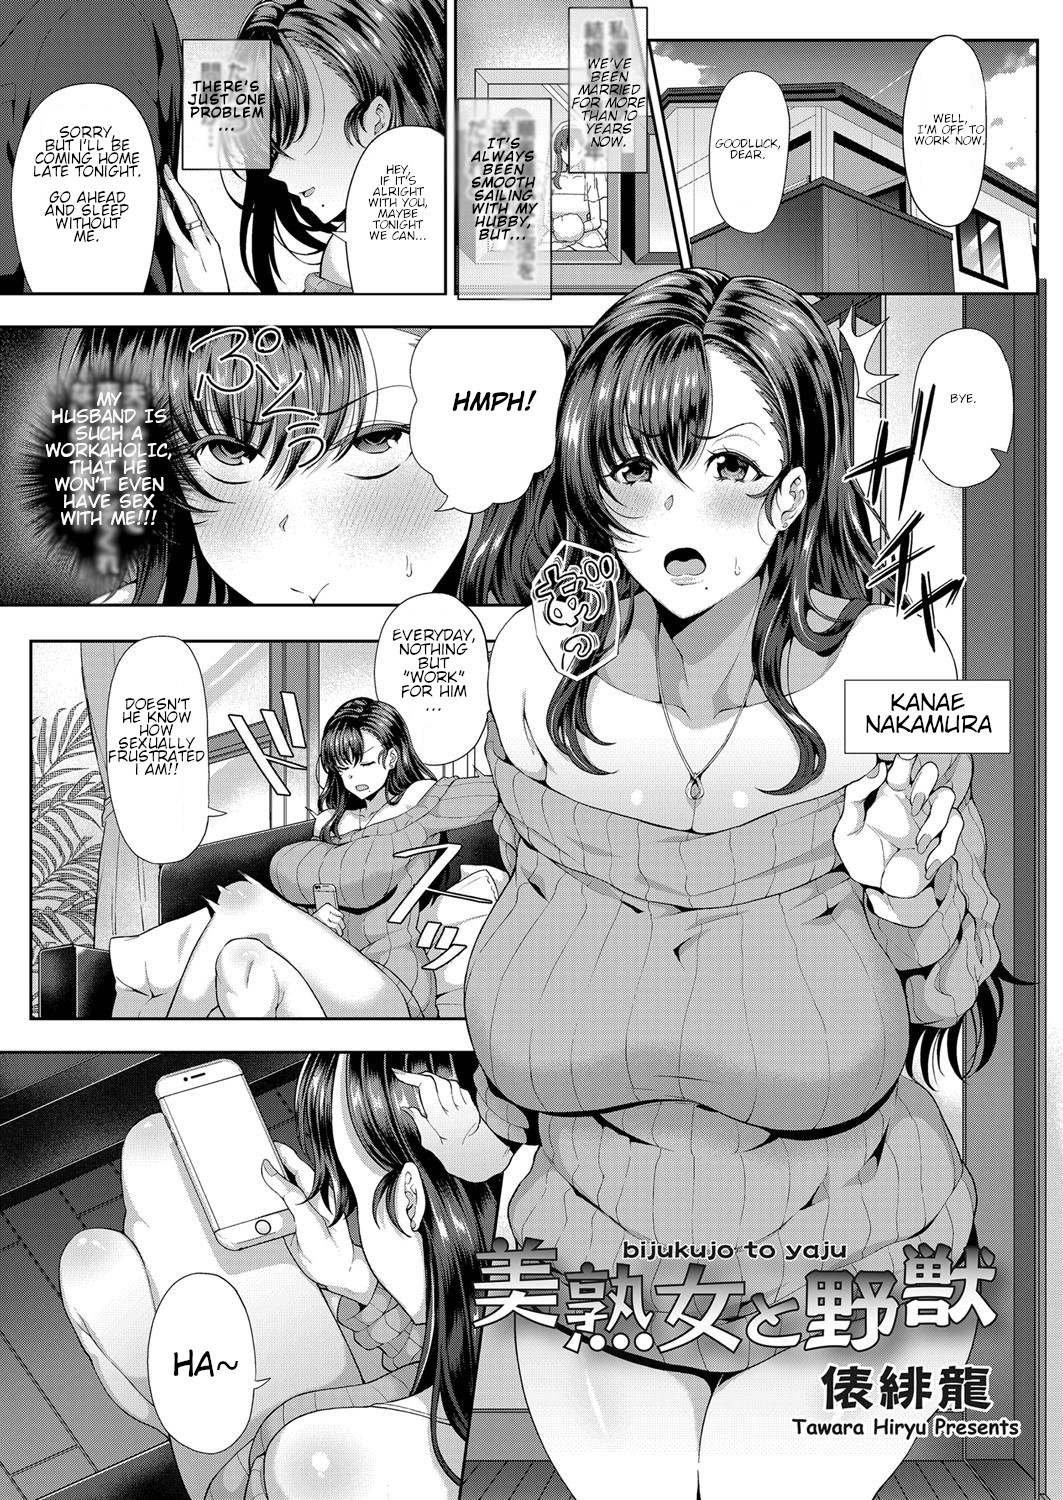 Anime milf manga